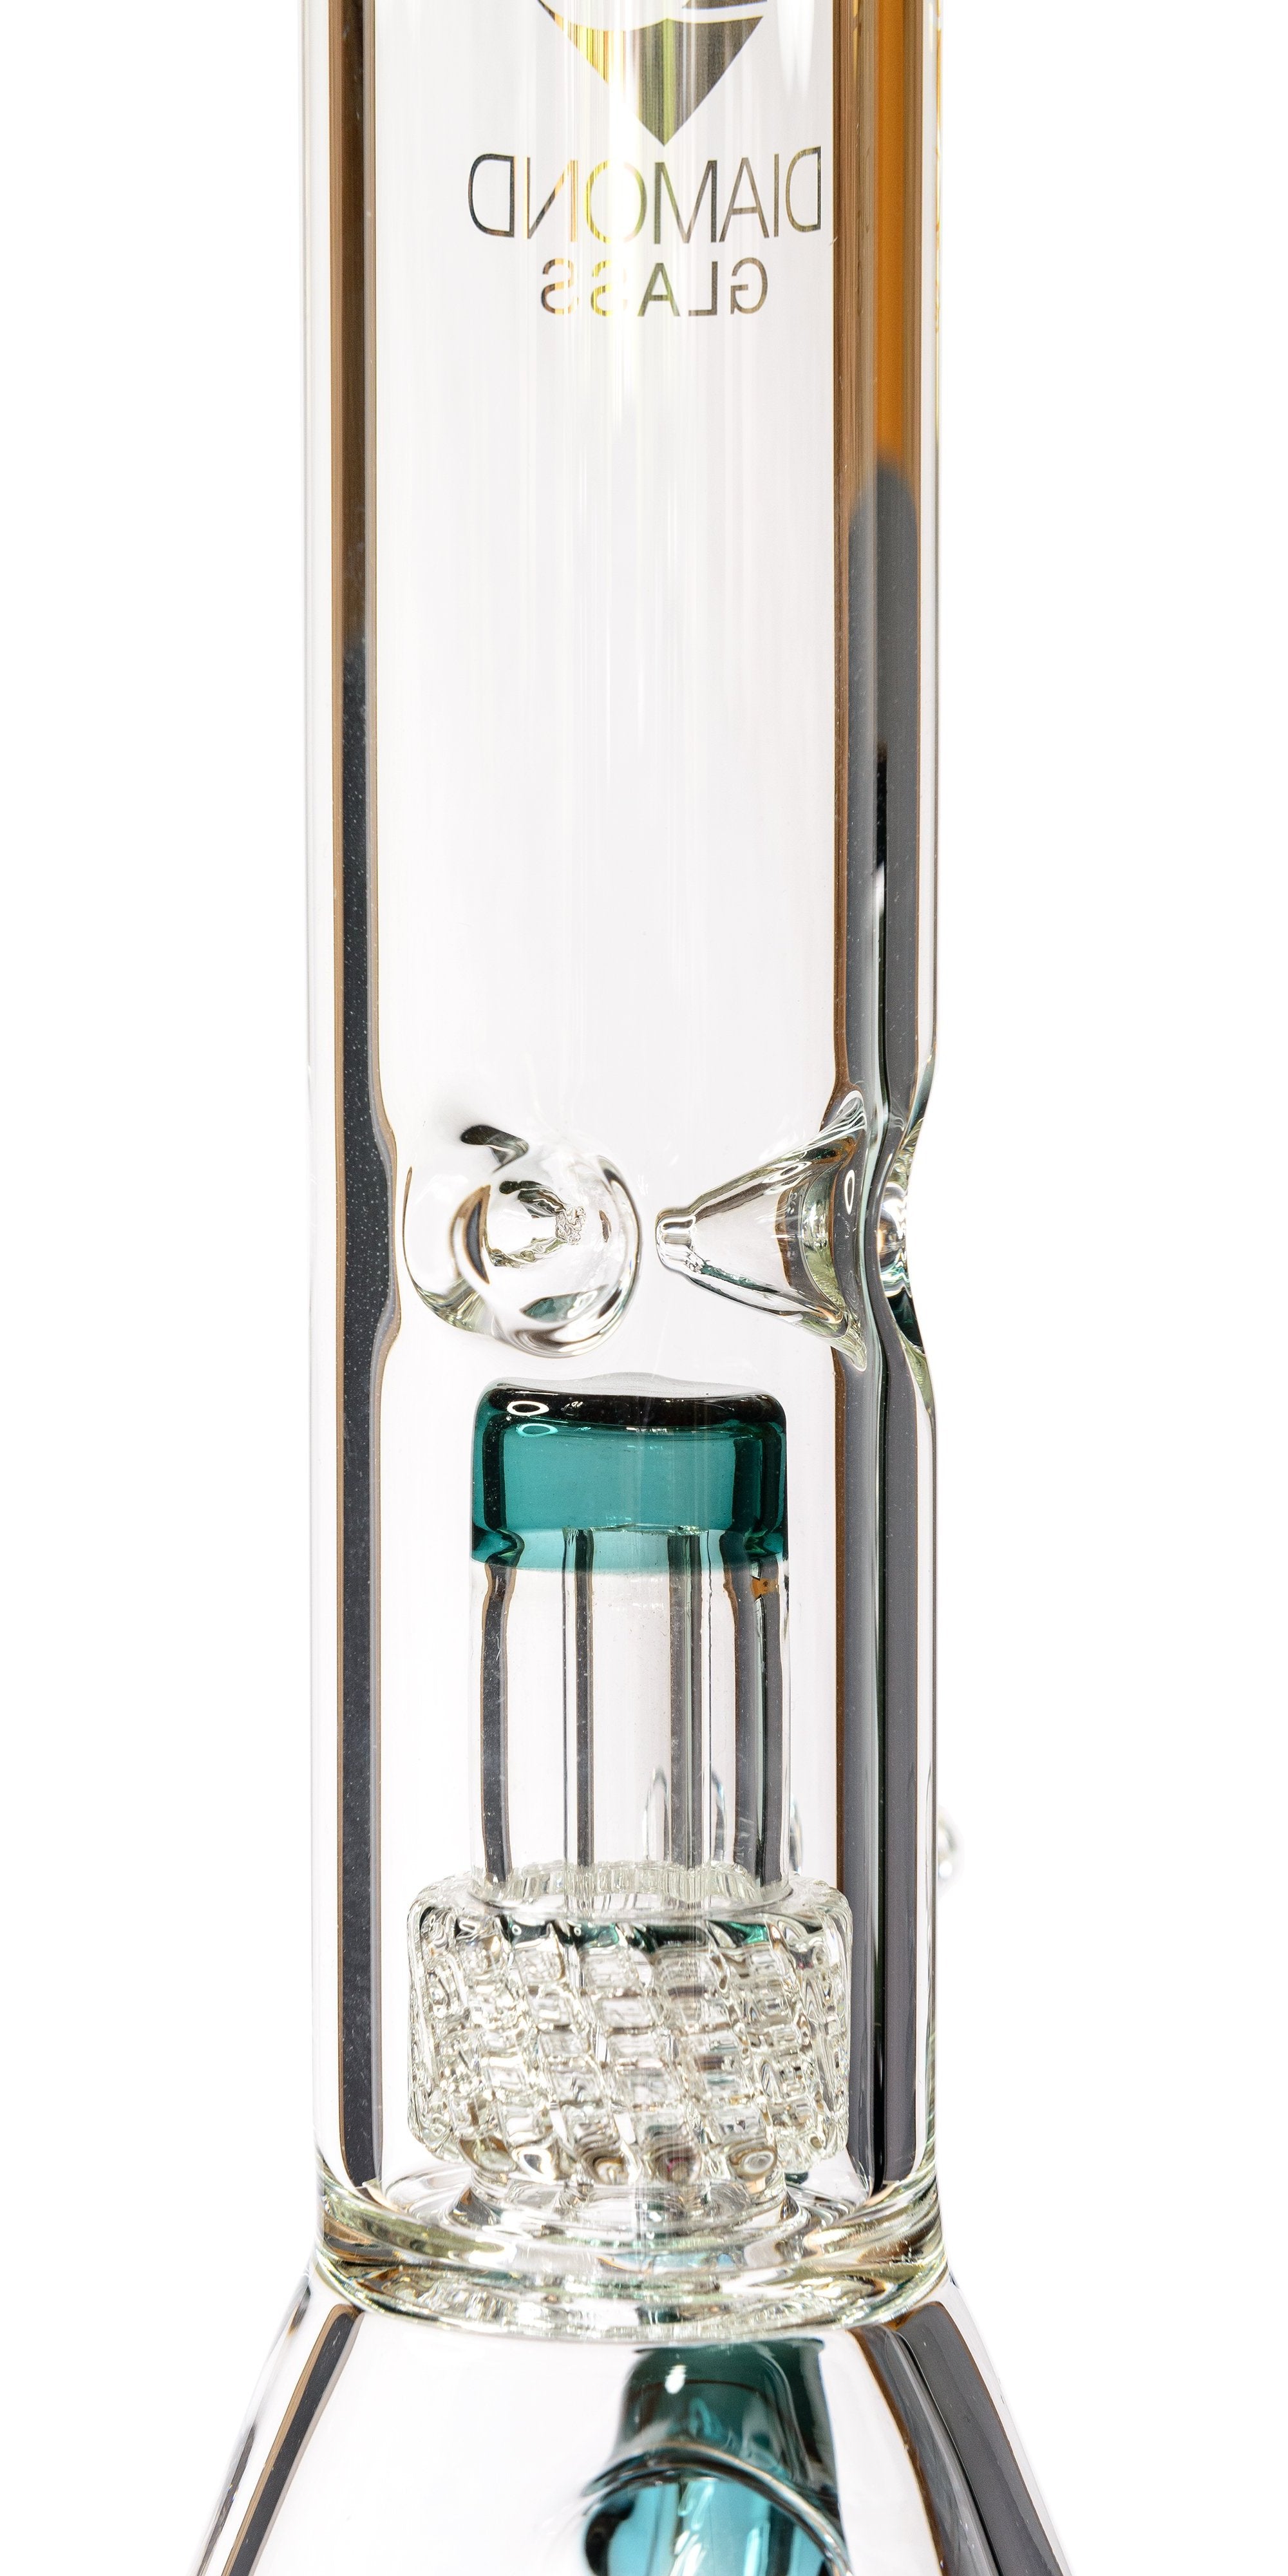 Bong Alien Calvo Glass 14 inch: Water Pipe includes a perc in the shape of  an alien head – Calvo Glass